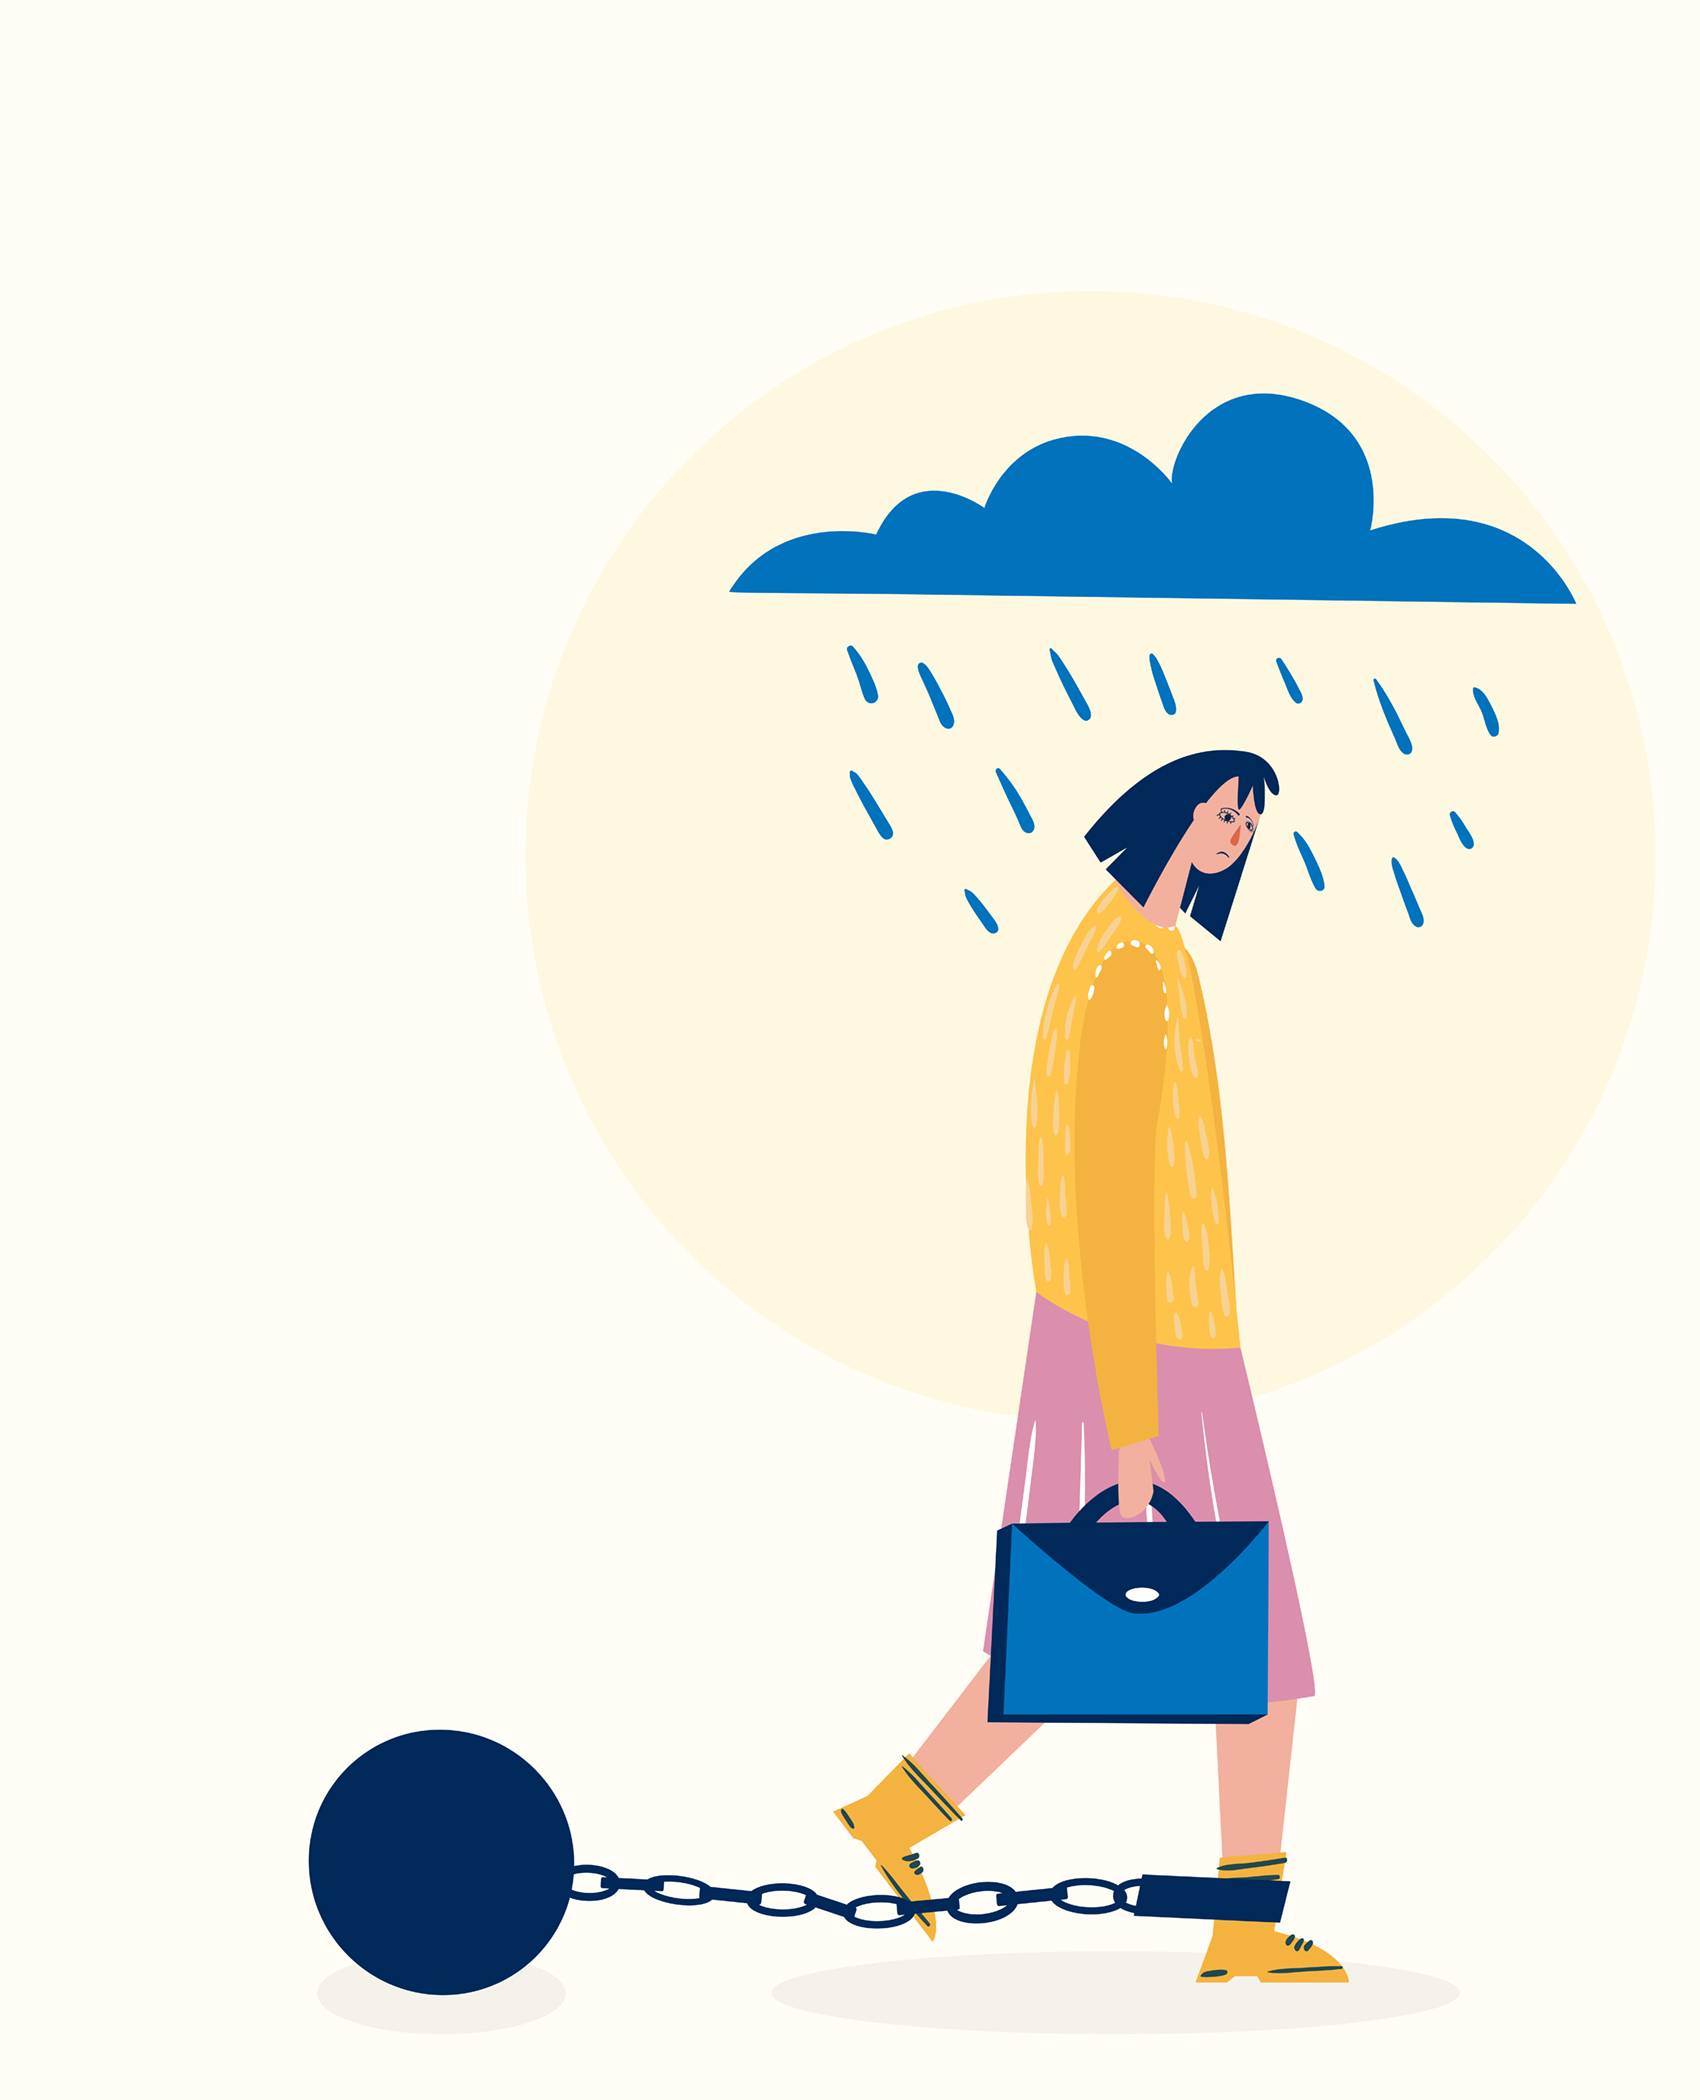 An illustration of someone being sad and walking through rain